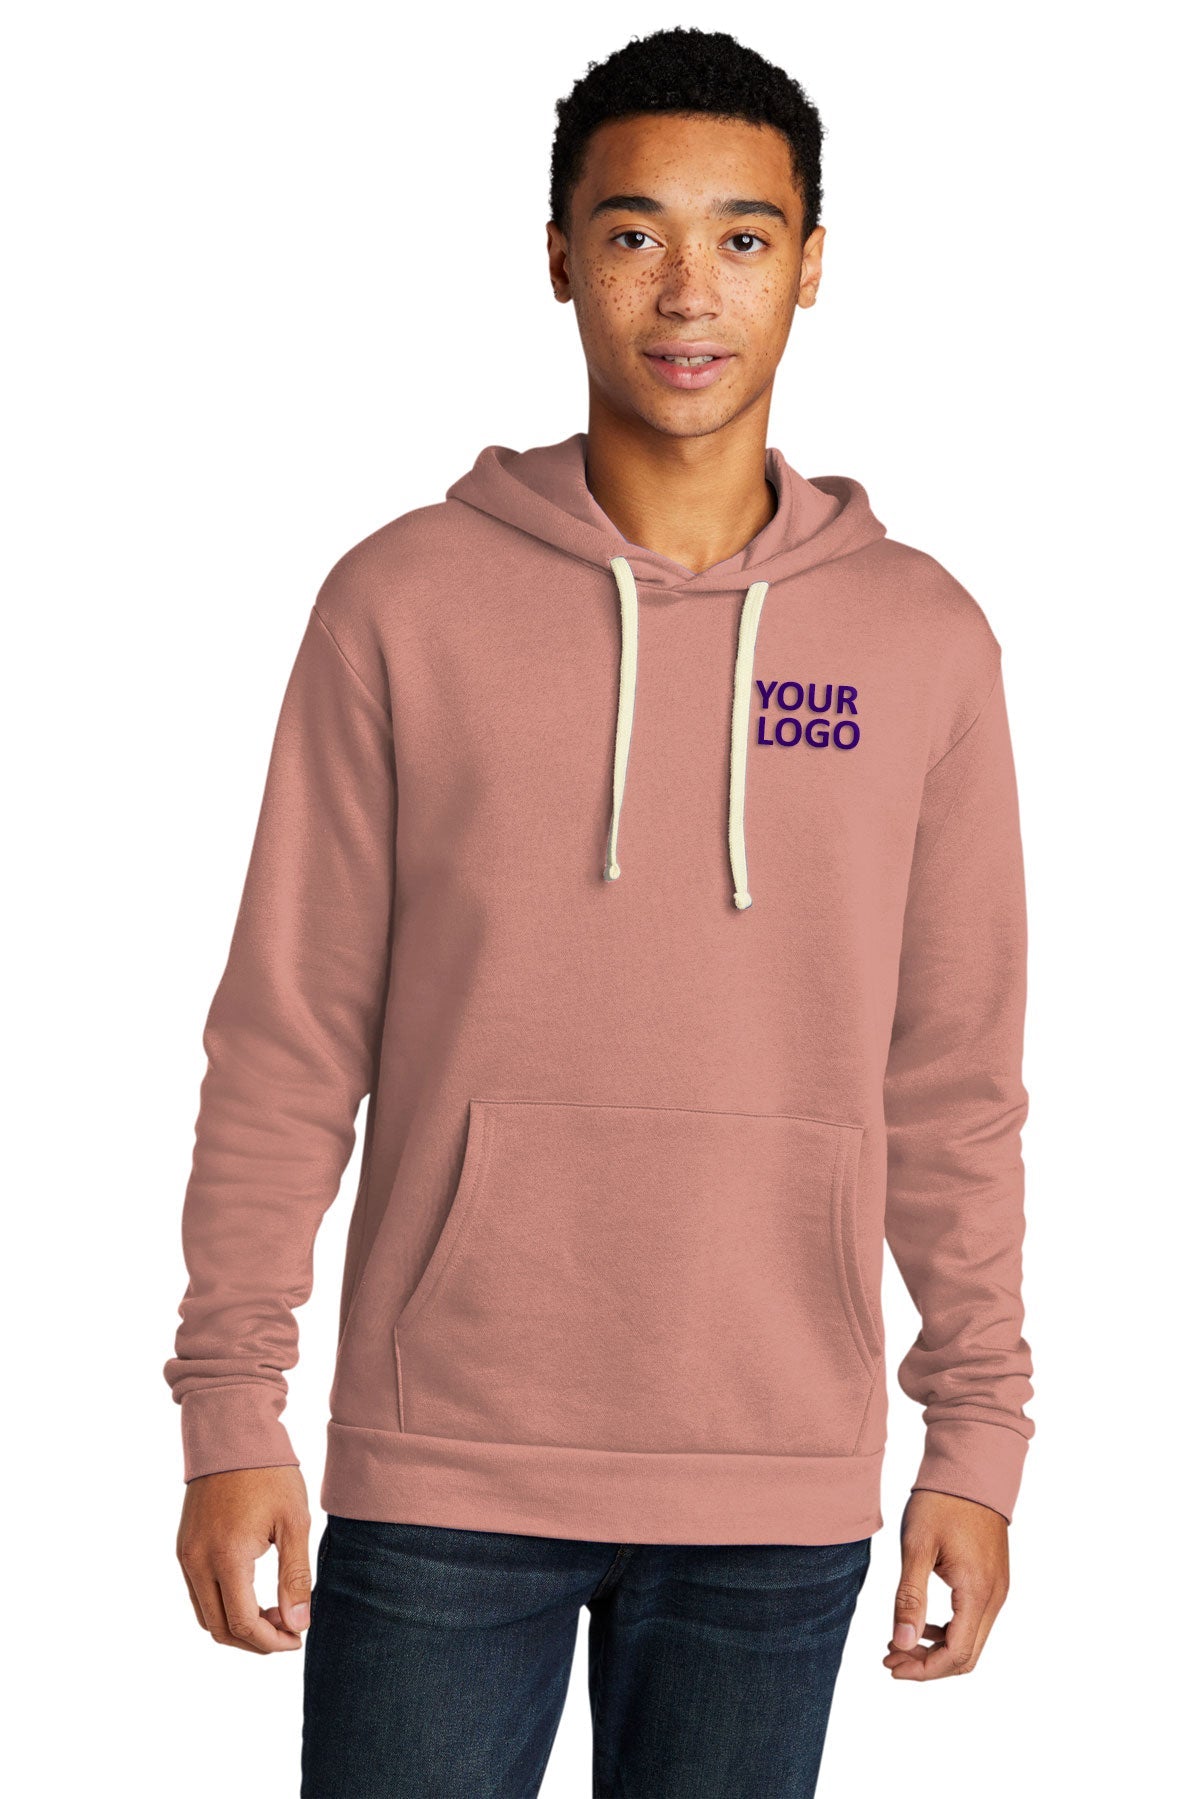 custom sweatshirts with logo Next Level Desert Pink NL9303